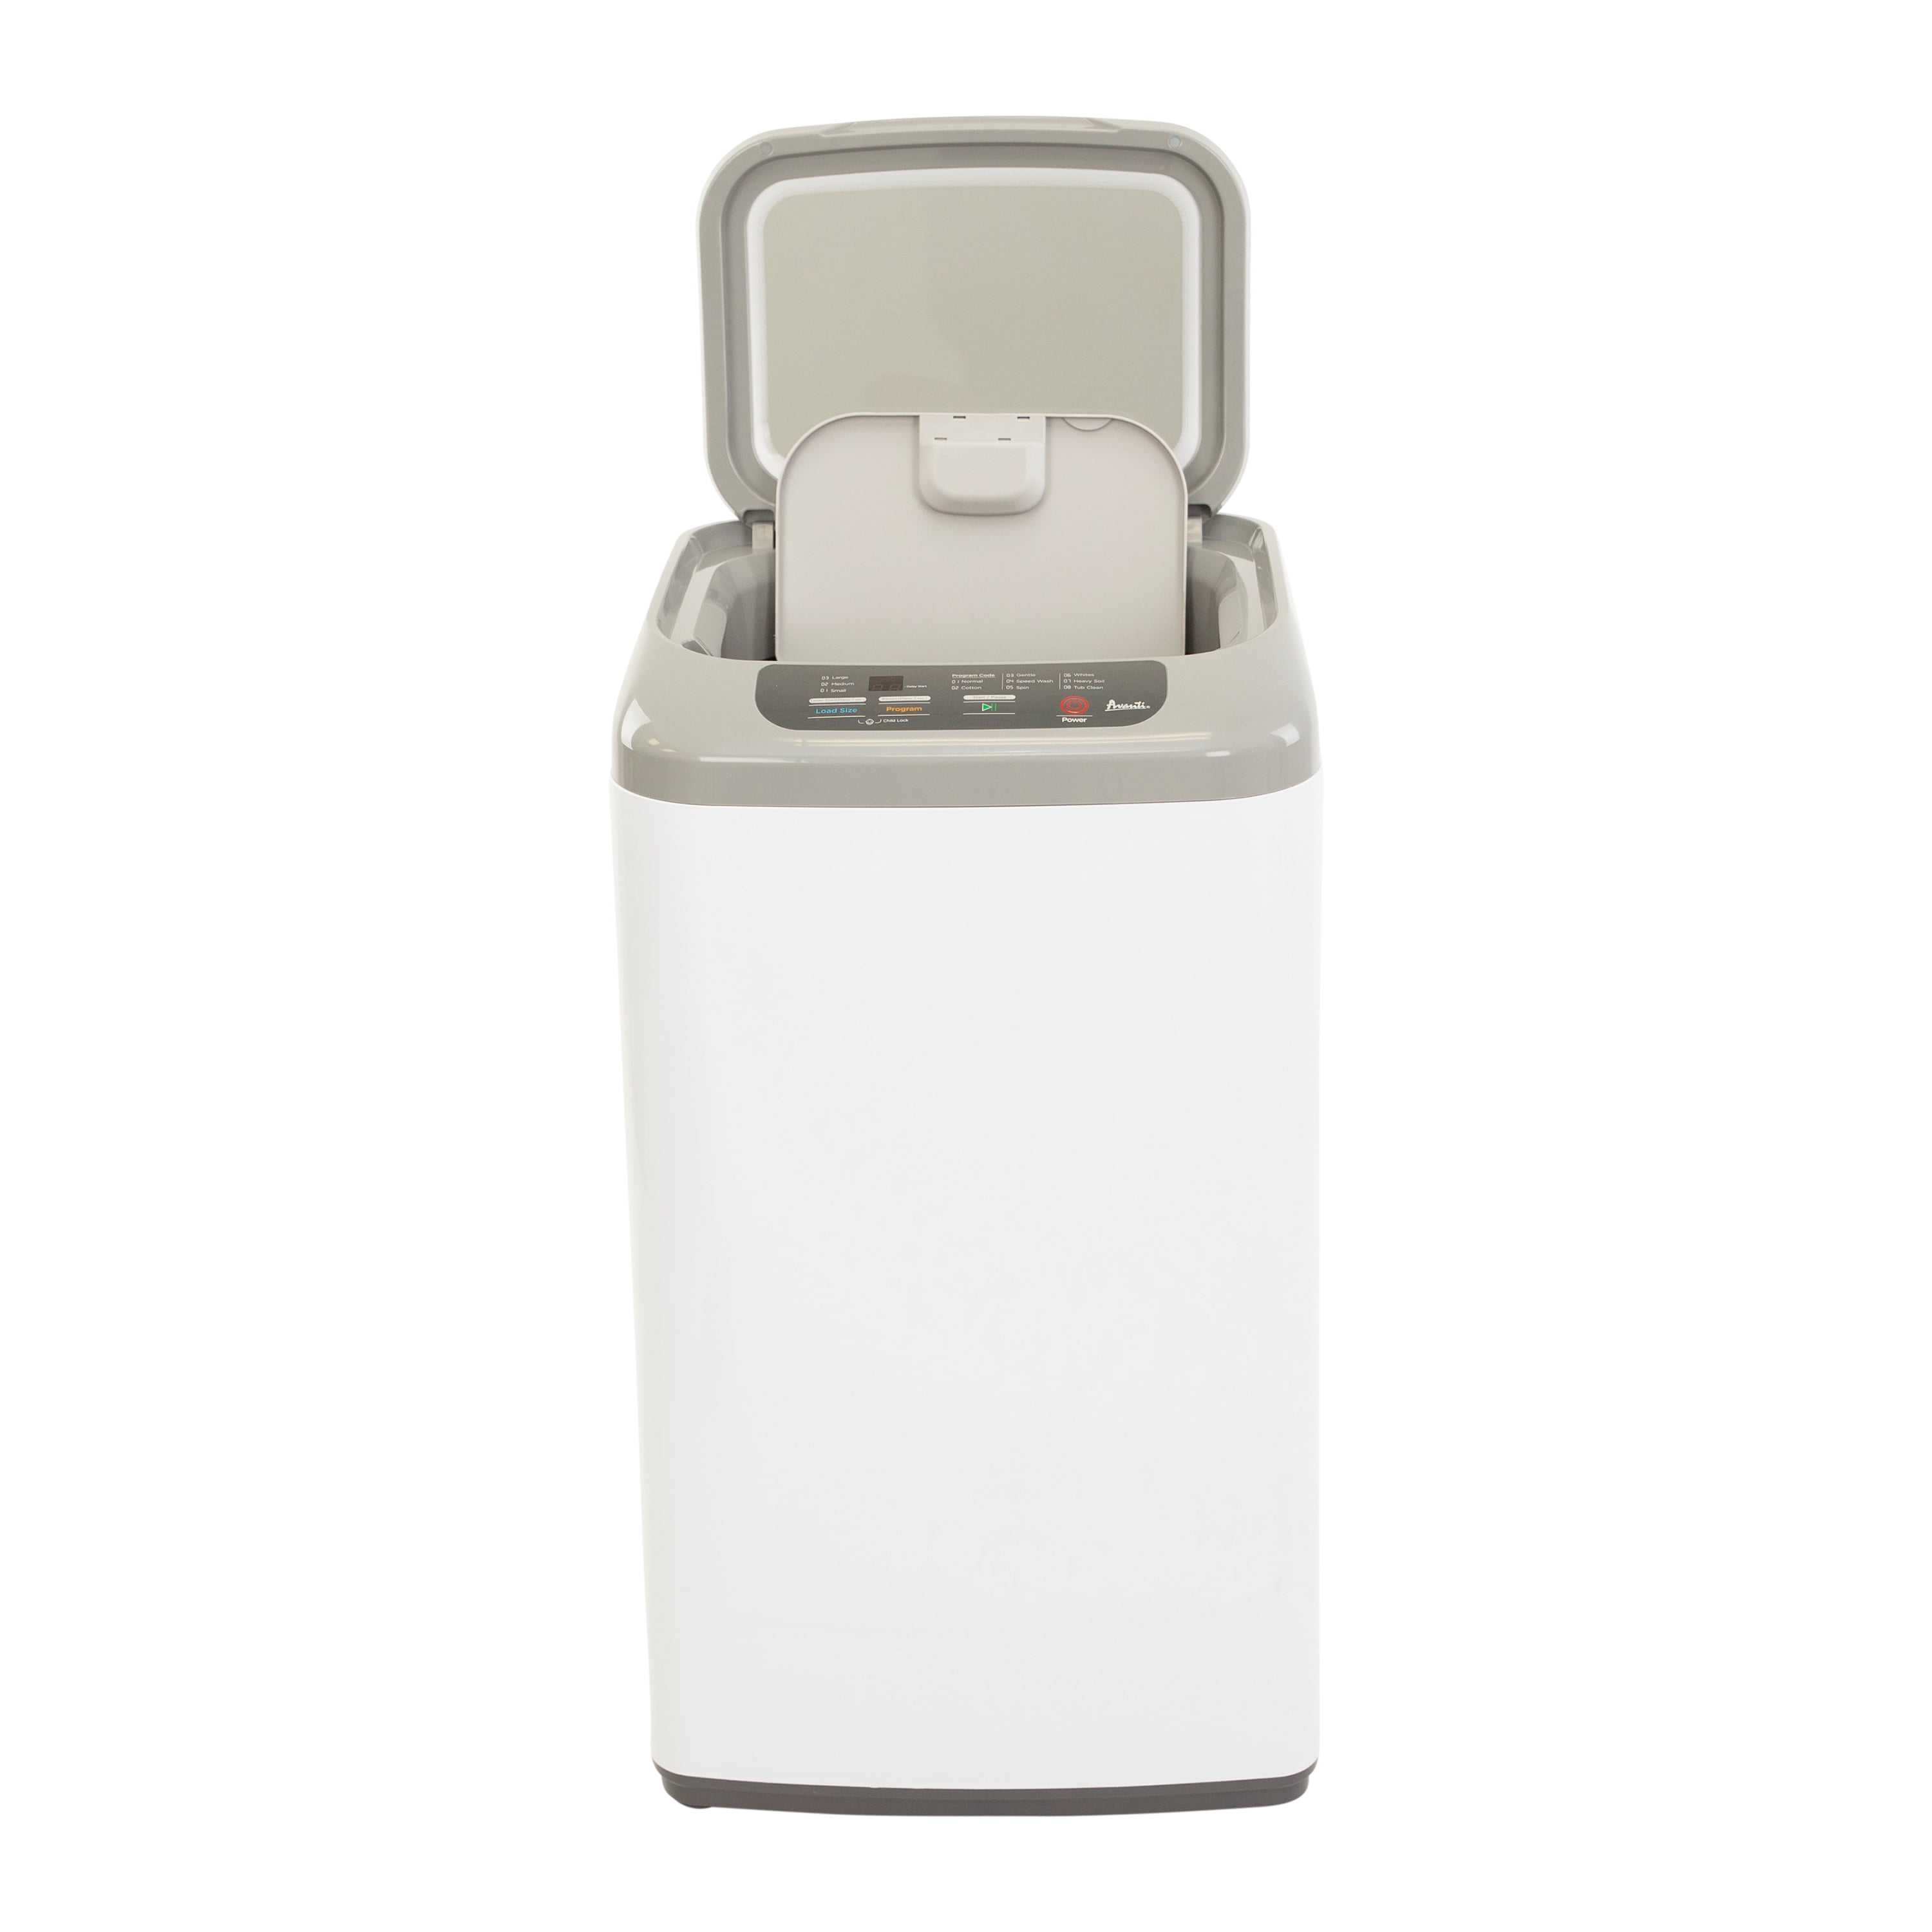 Avanti Ctw84x0wis - 0.84 CF Top Load Portable Washer, White